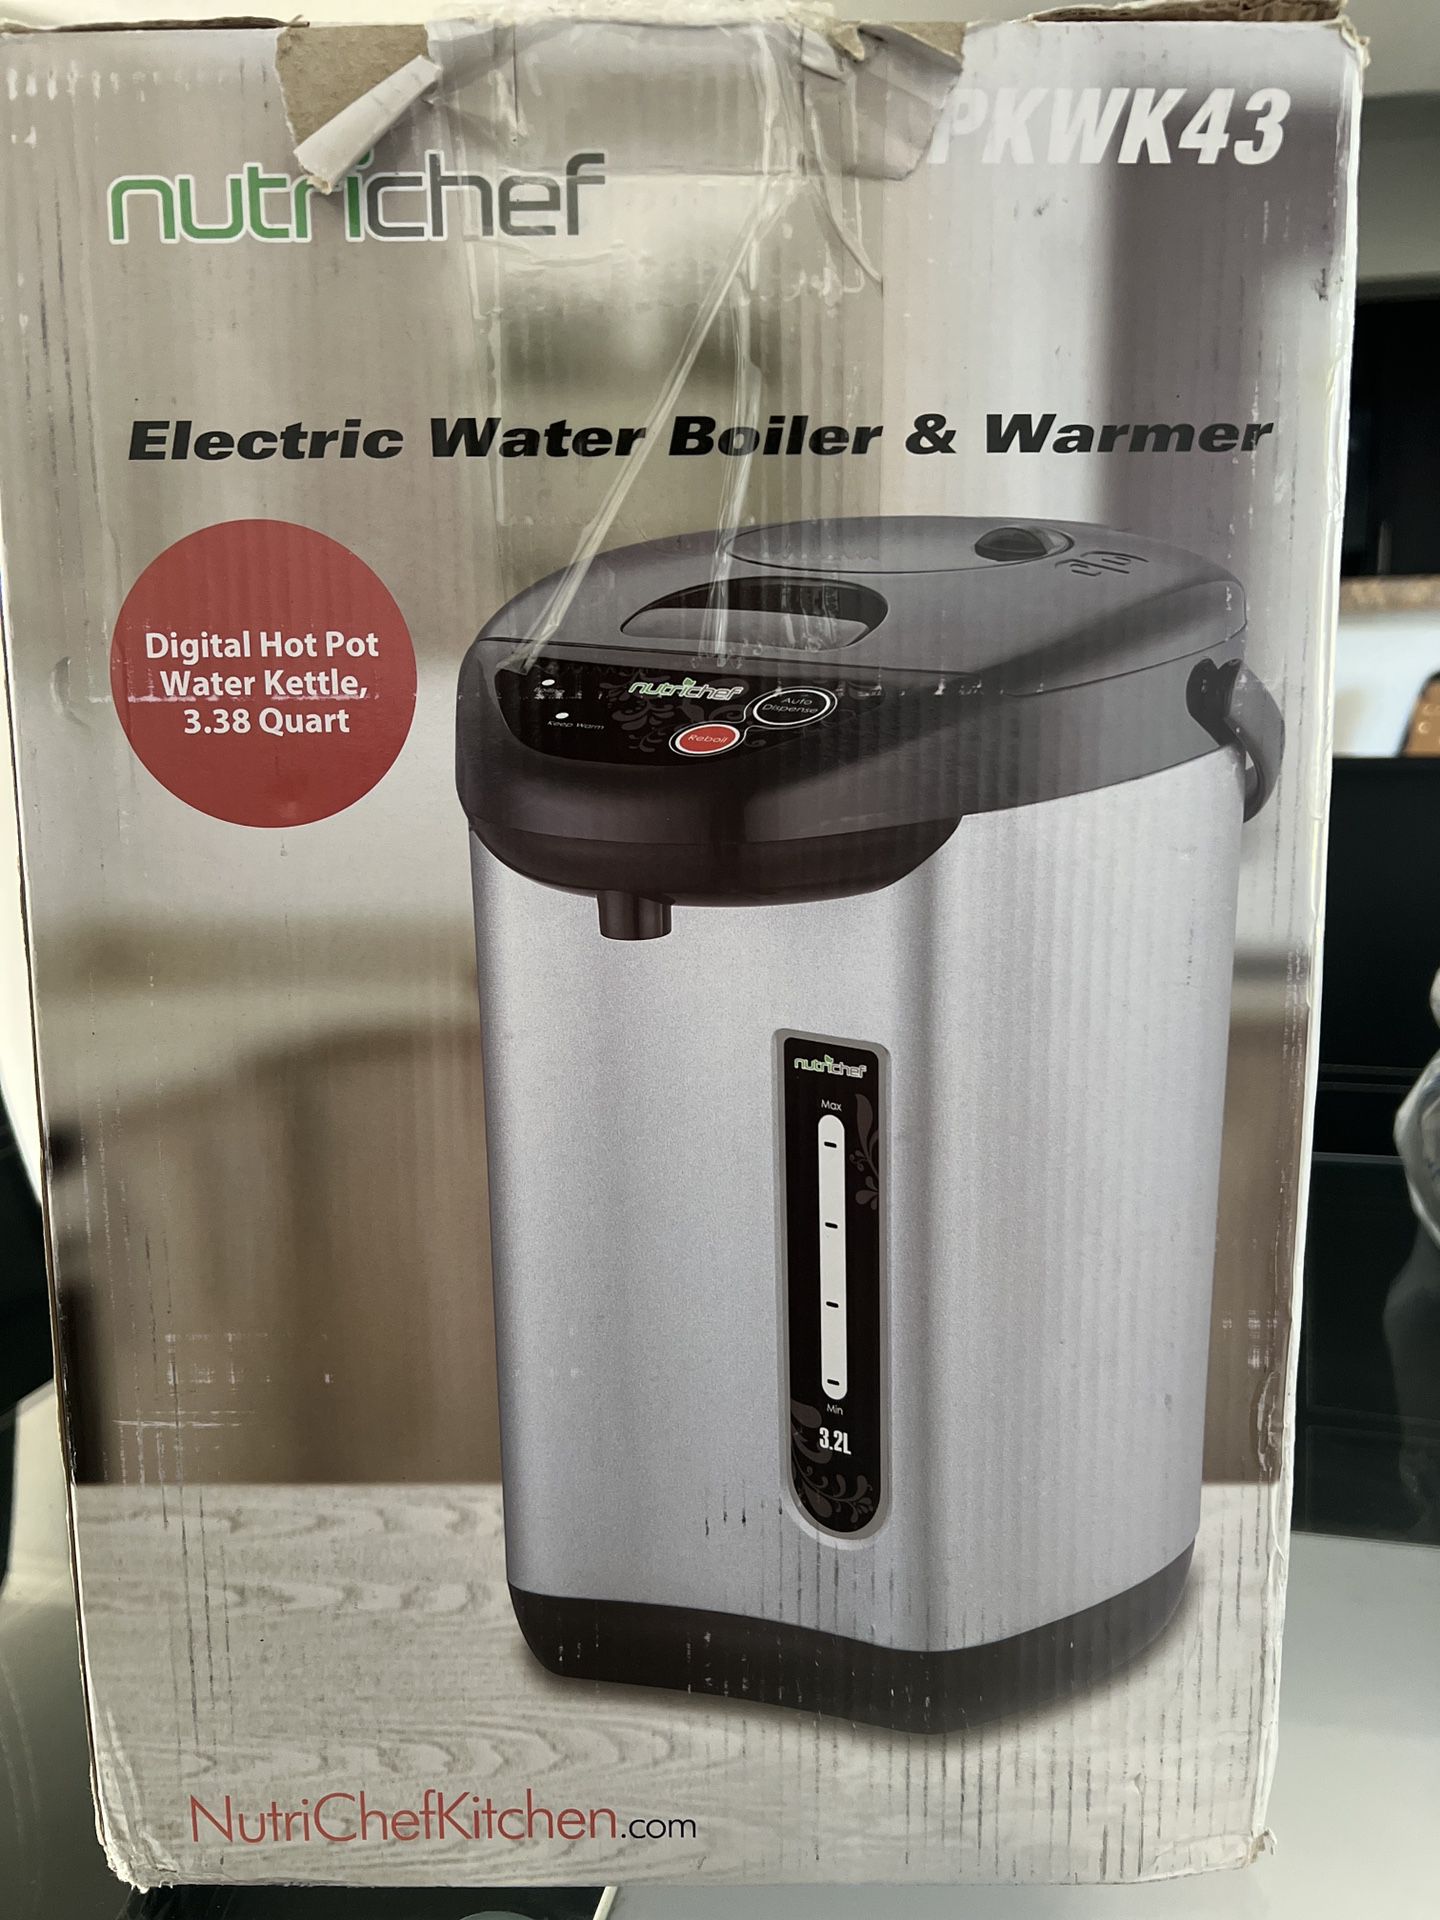 Nutri-Chef PKWK43 Electric Water Boiler & Warmer - Digital Hot Pot Water  Kettle for Sale in Dallas, TX - OfferUp